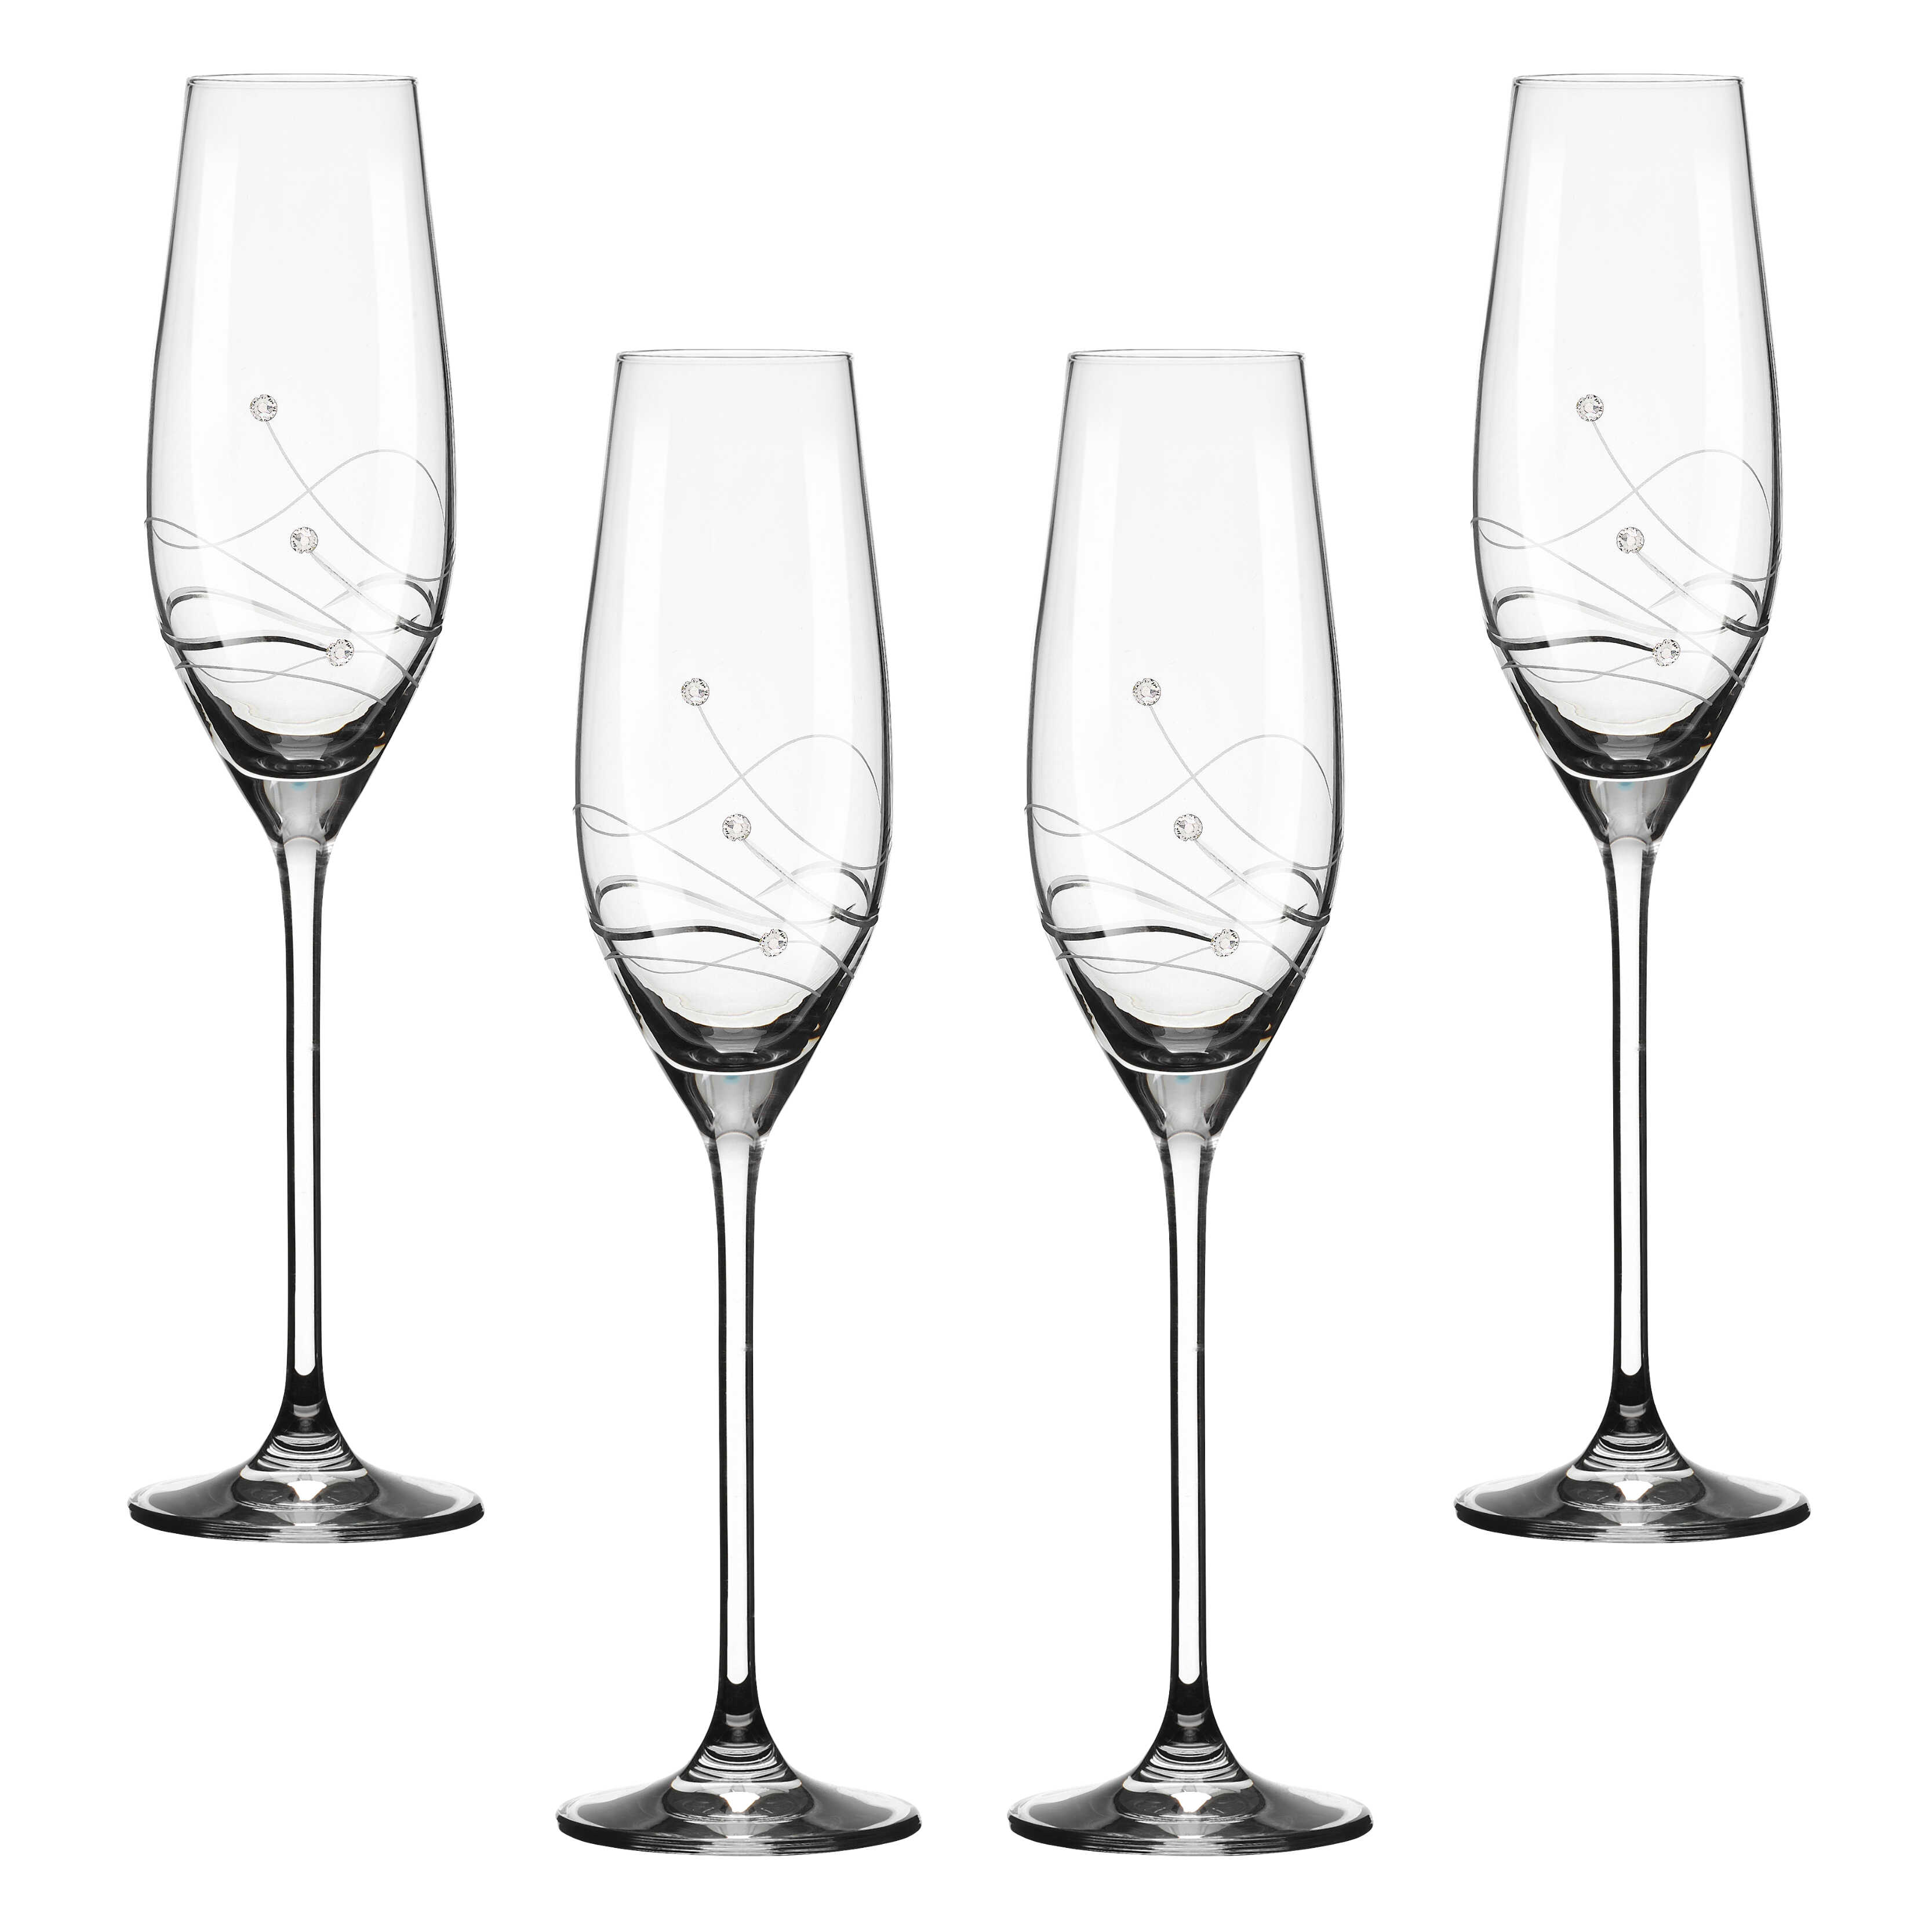 Se Clio Champagneglas med Swarovski krystaller - 4 stk. hos LforLiving.dk